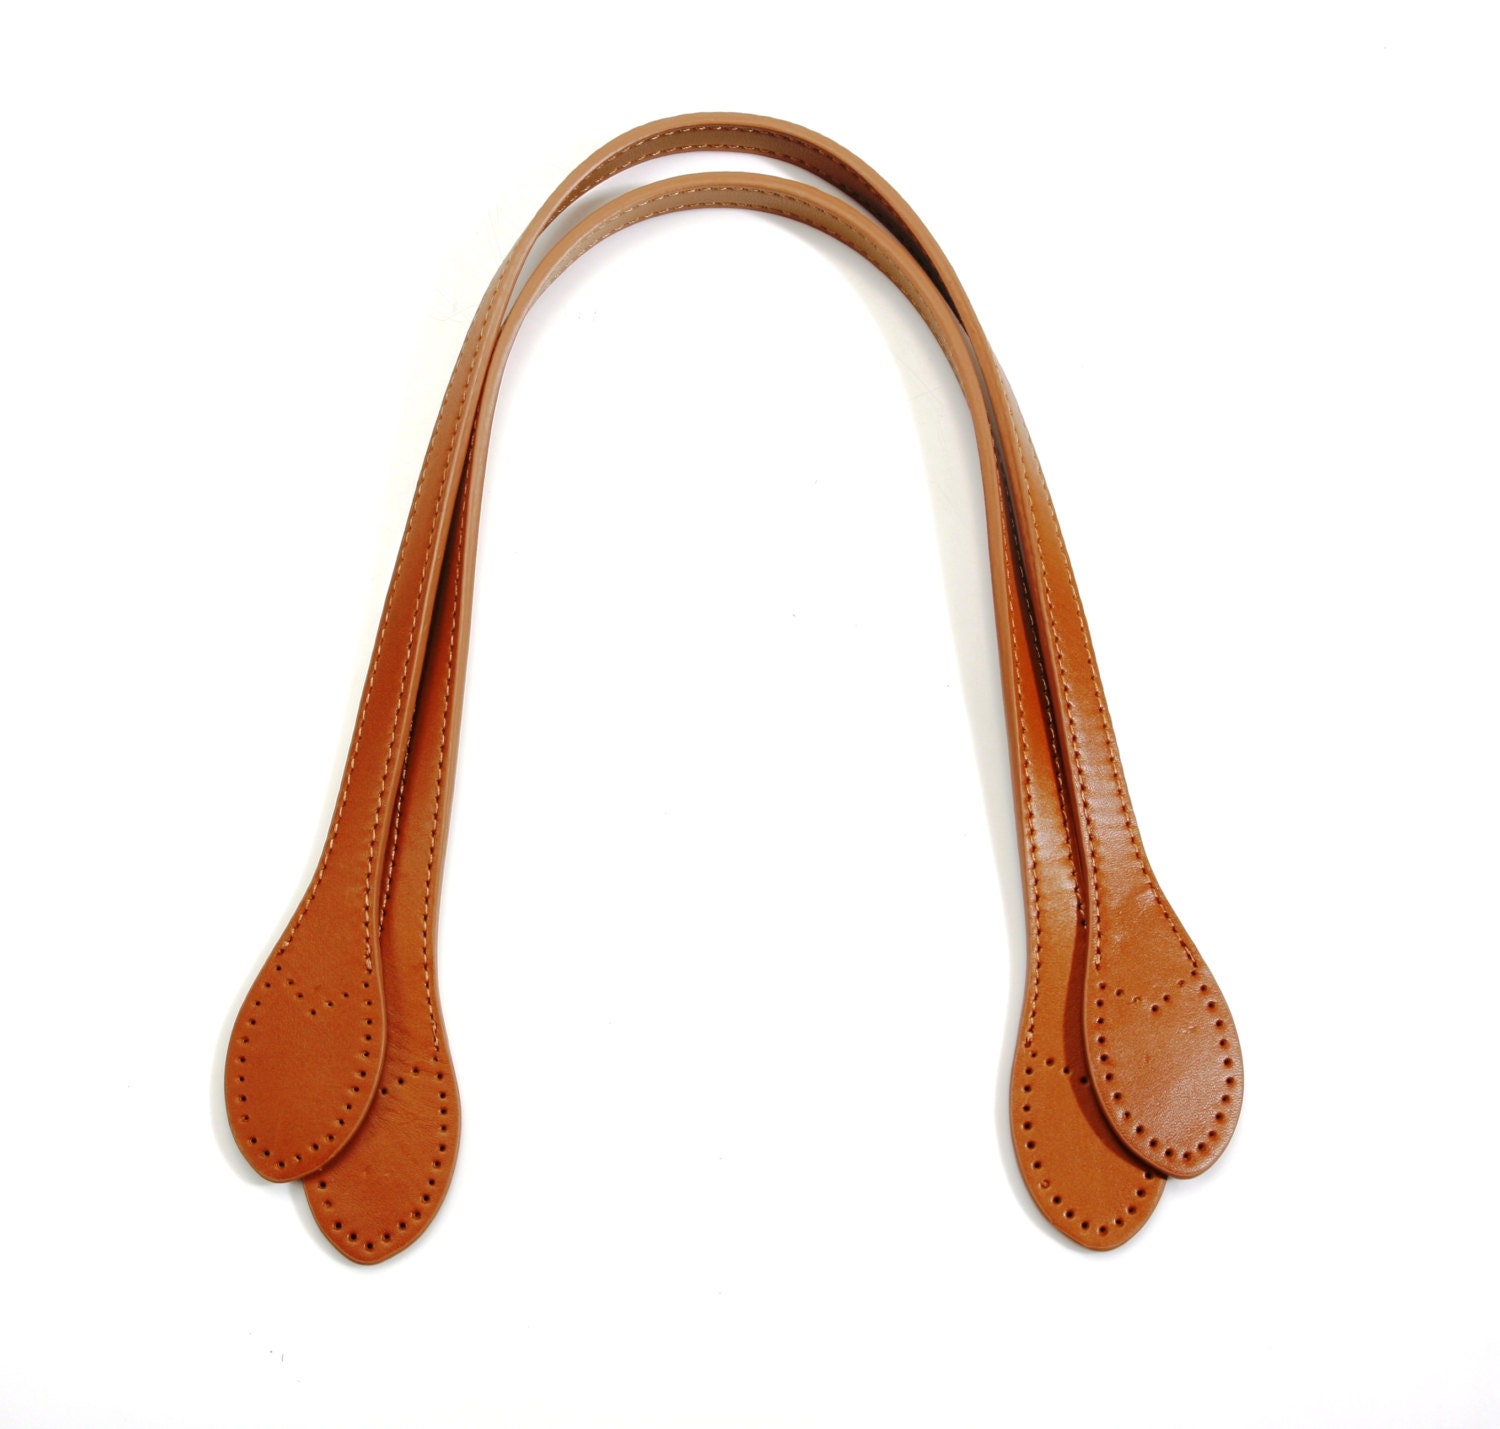 23 byhands Genuine Leather Purse Handles / Bag Strap